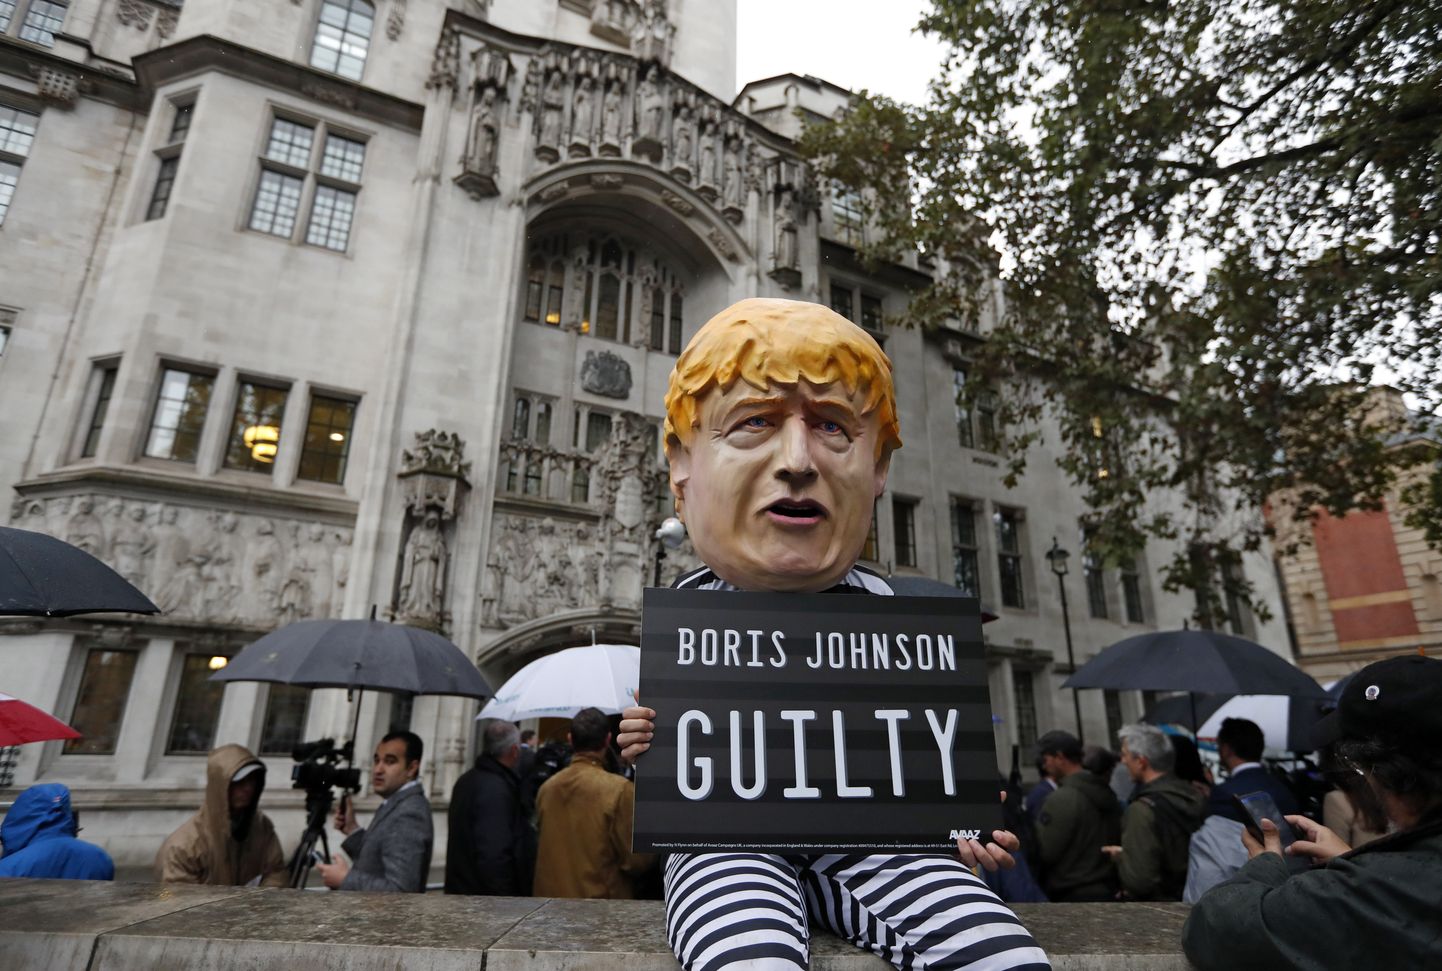 Londonis riietas protestija end peaminister Boris Johnsoniks, kes hoiab käes silti «Boris Johnson on süüdi».